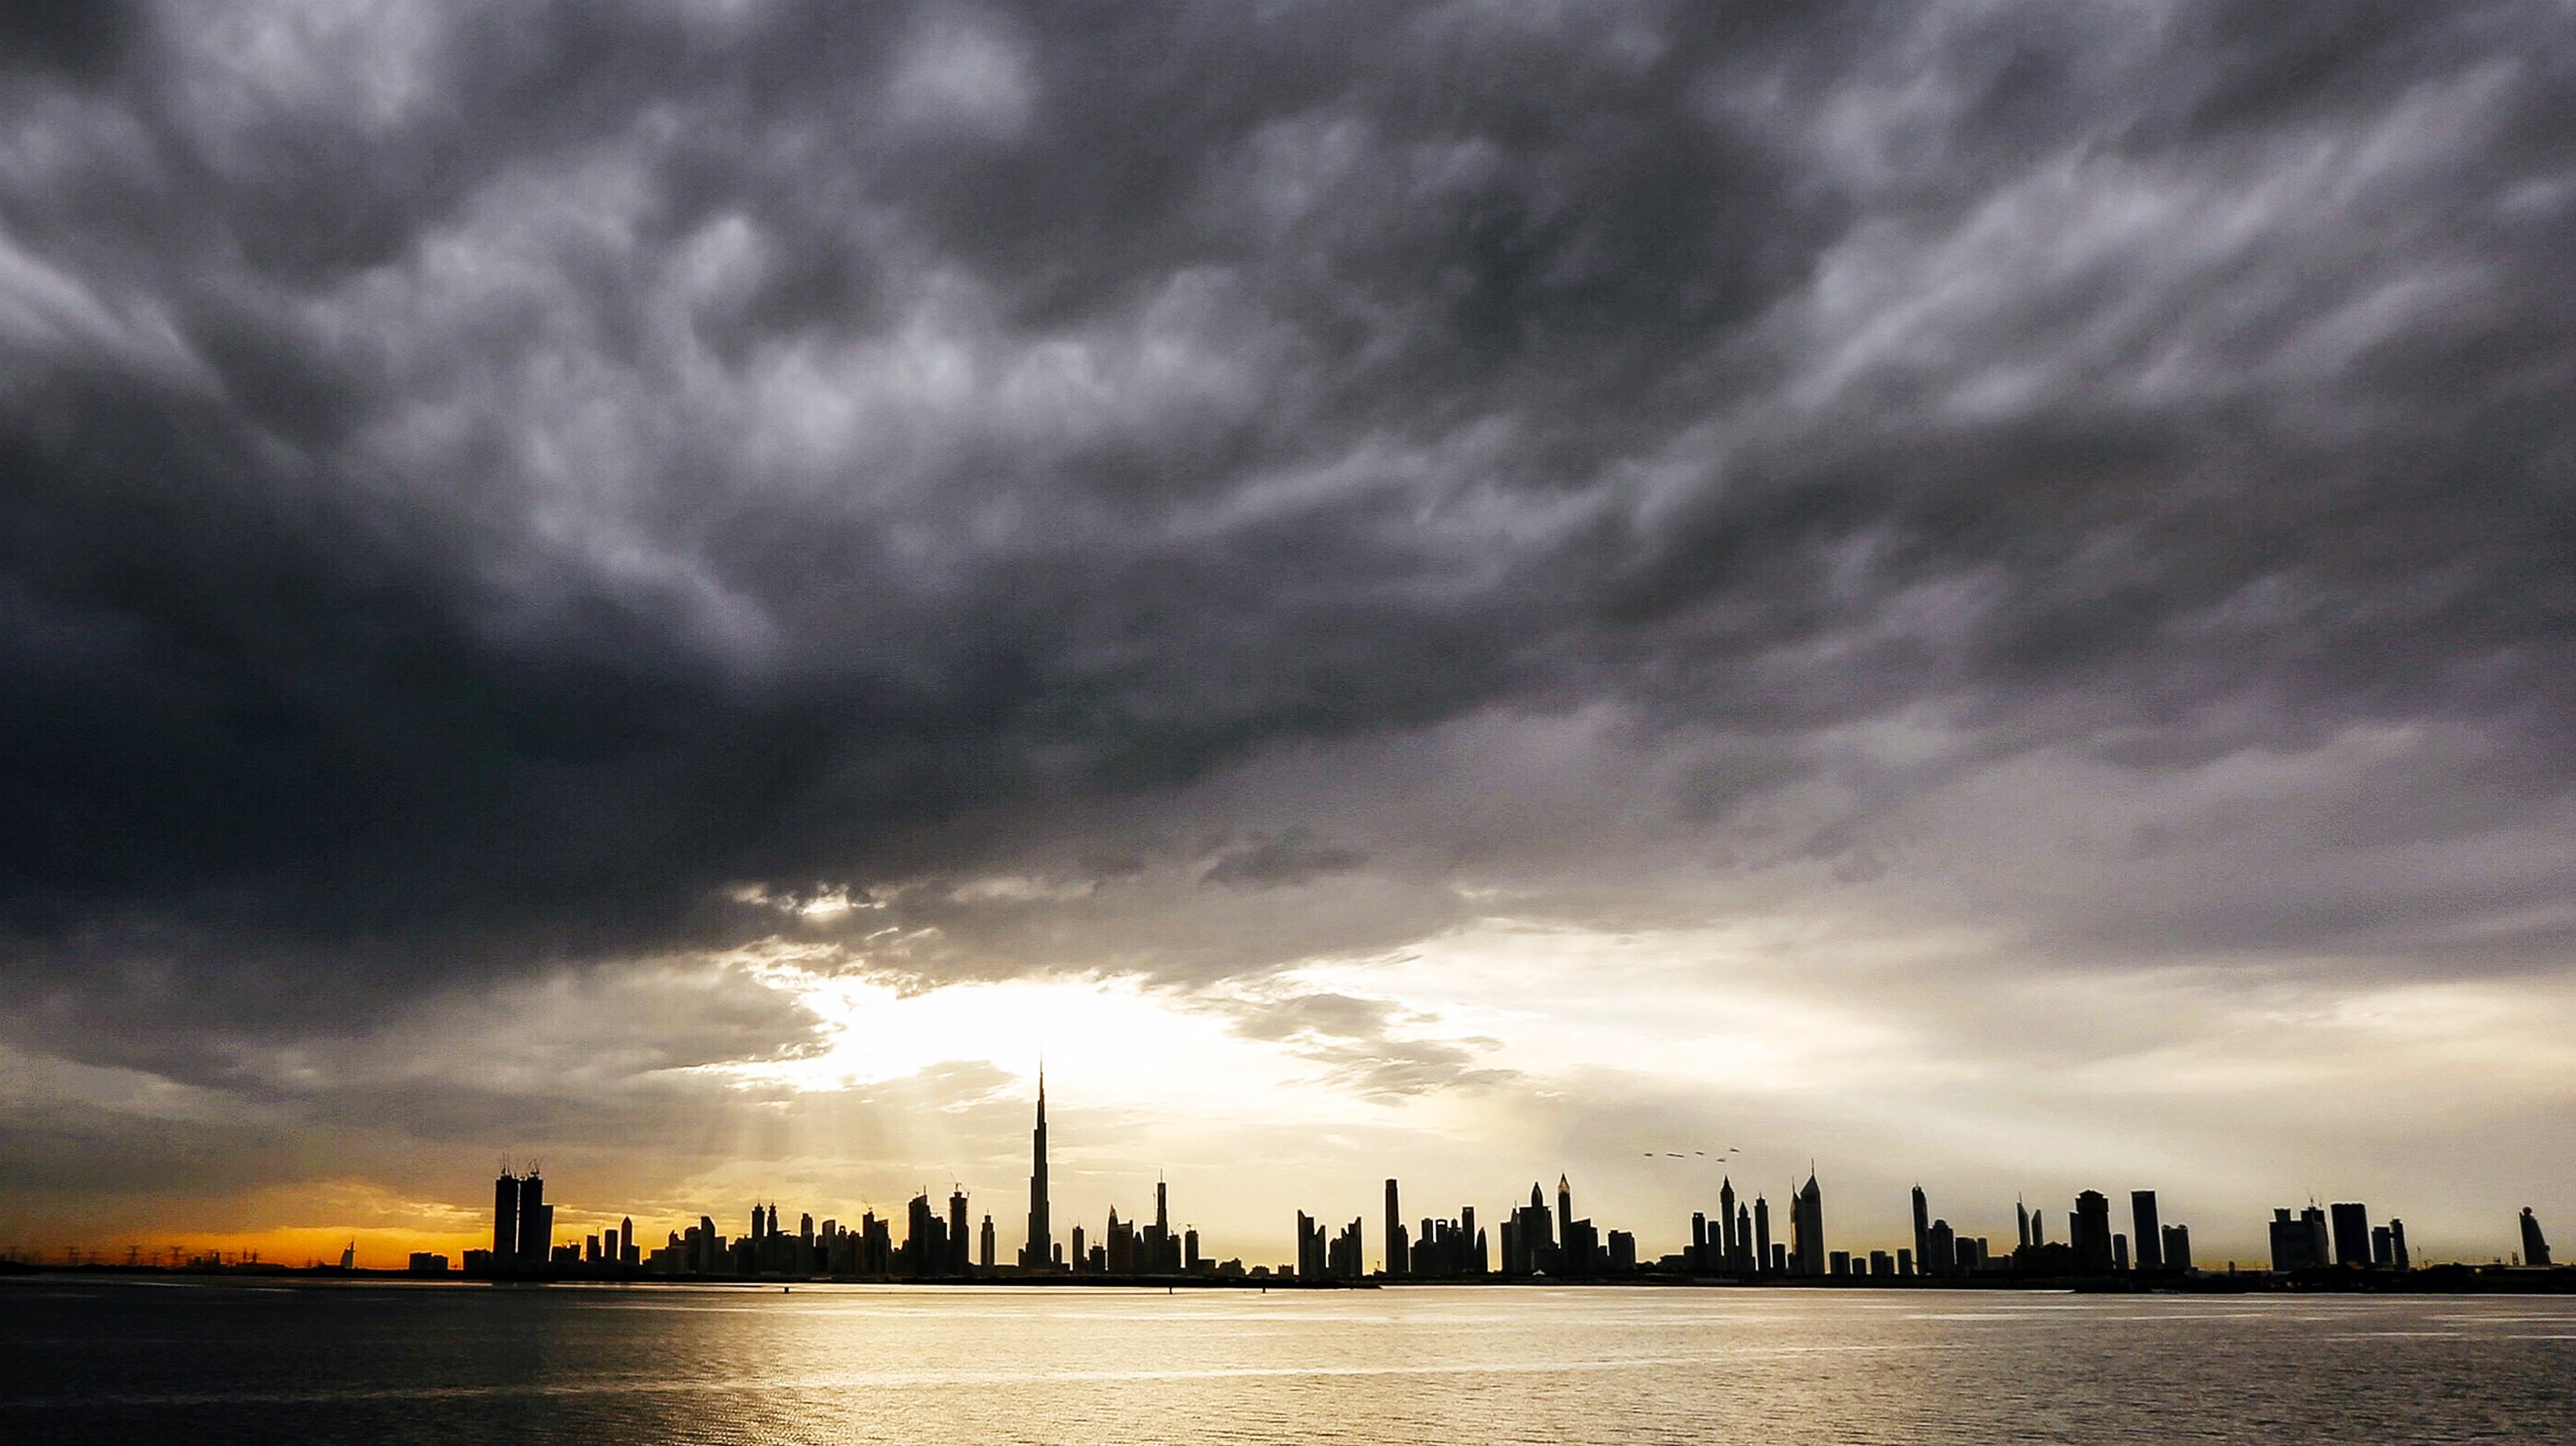 Views of the Dubai skyline in the UAE